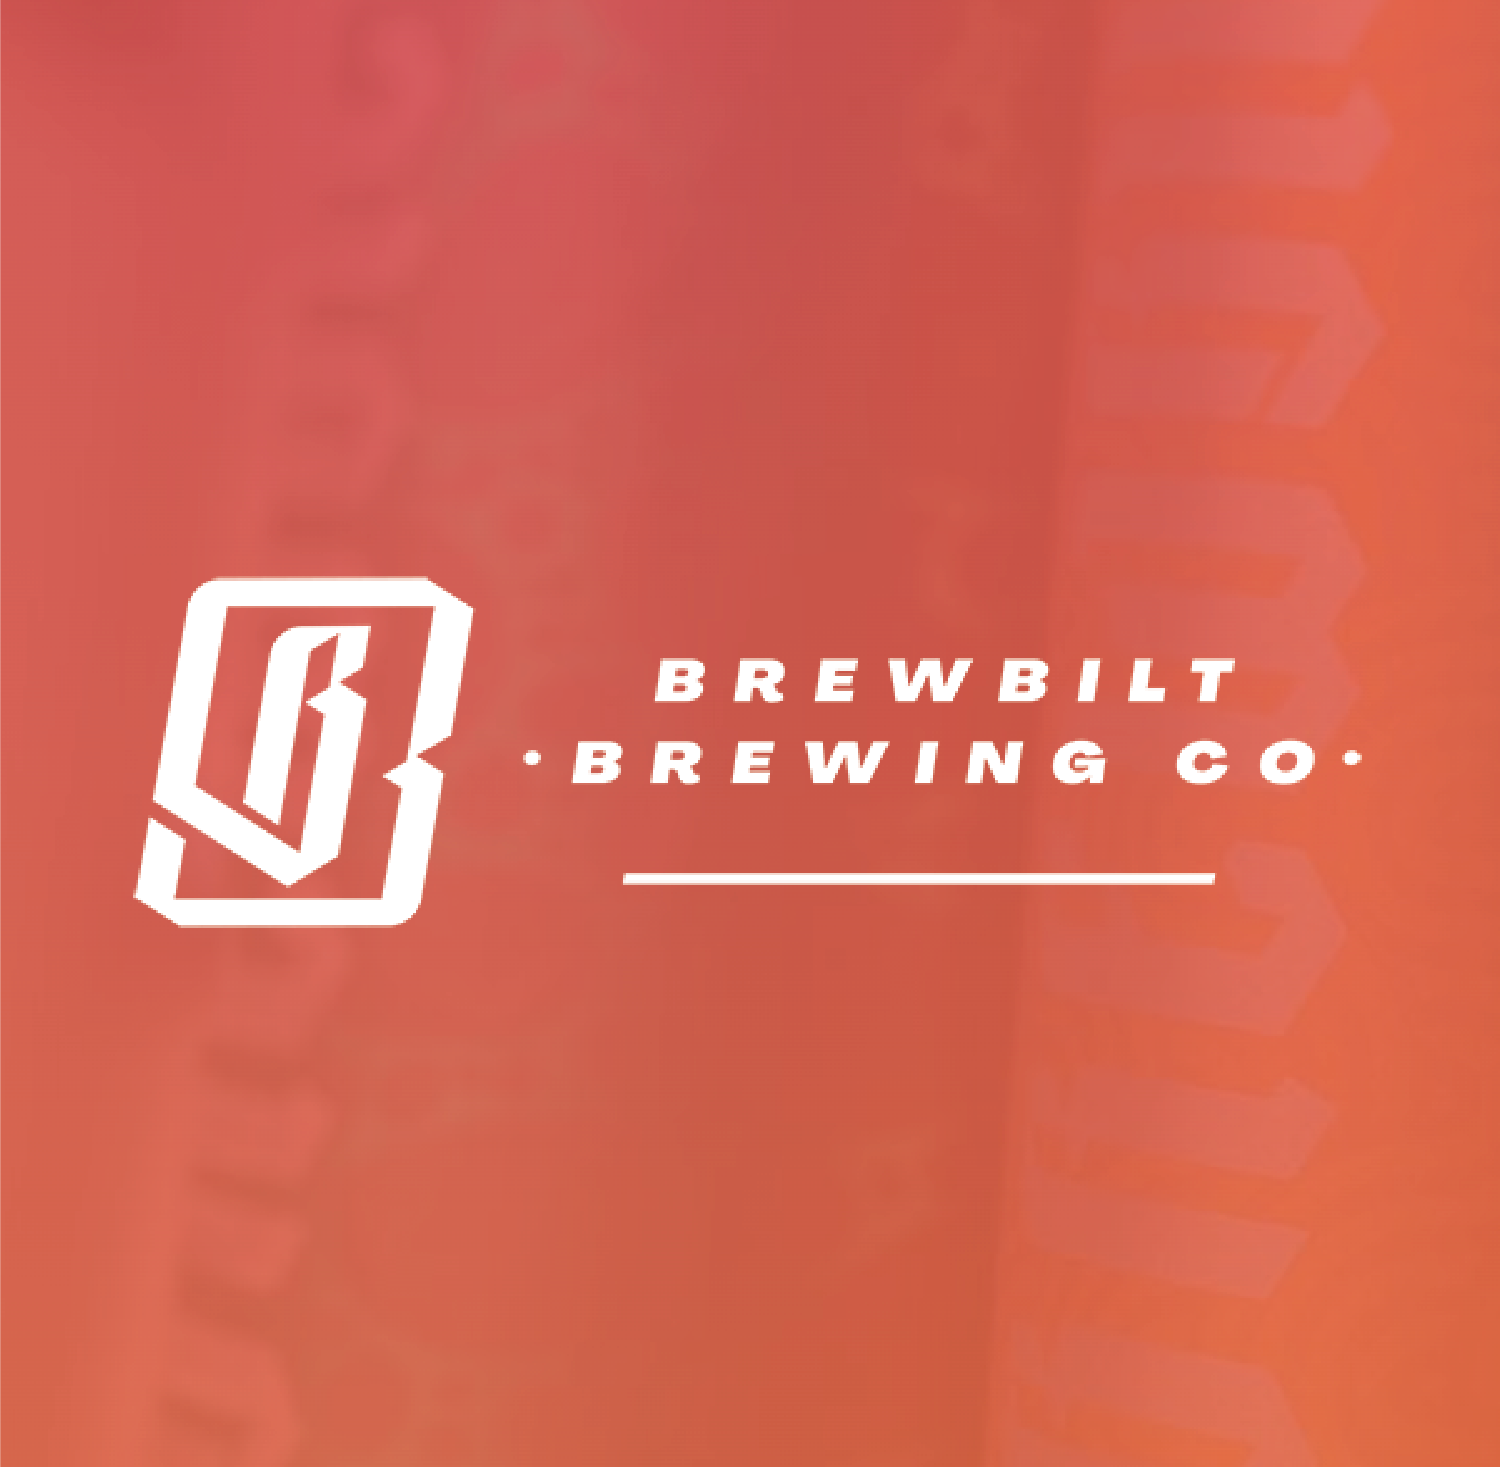 Brewbilt Brewing Co.